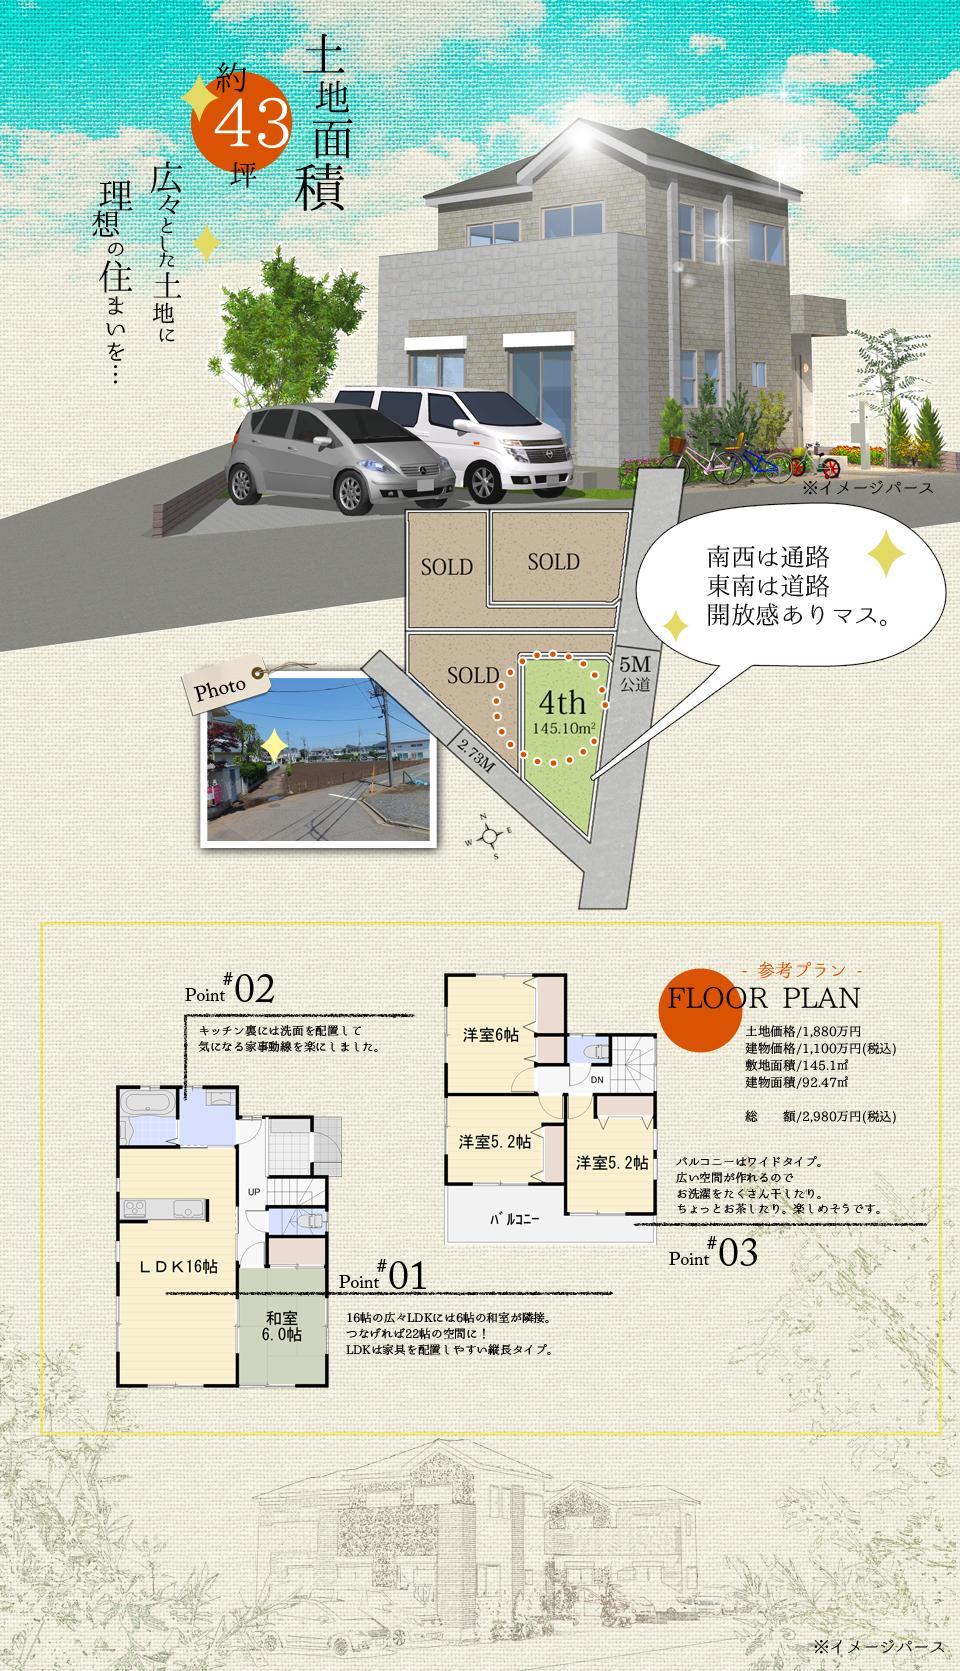 Building plan example (exterior photos). Building plan example (No. 4 place) building price 11 million yen, Building area 92.47 sq m